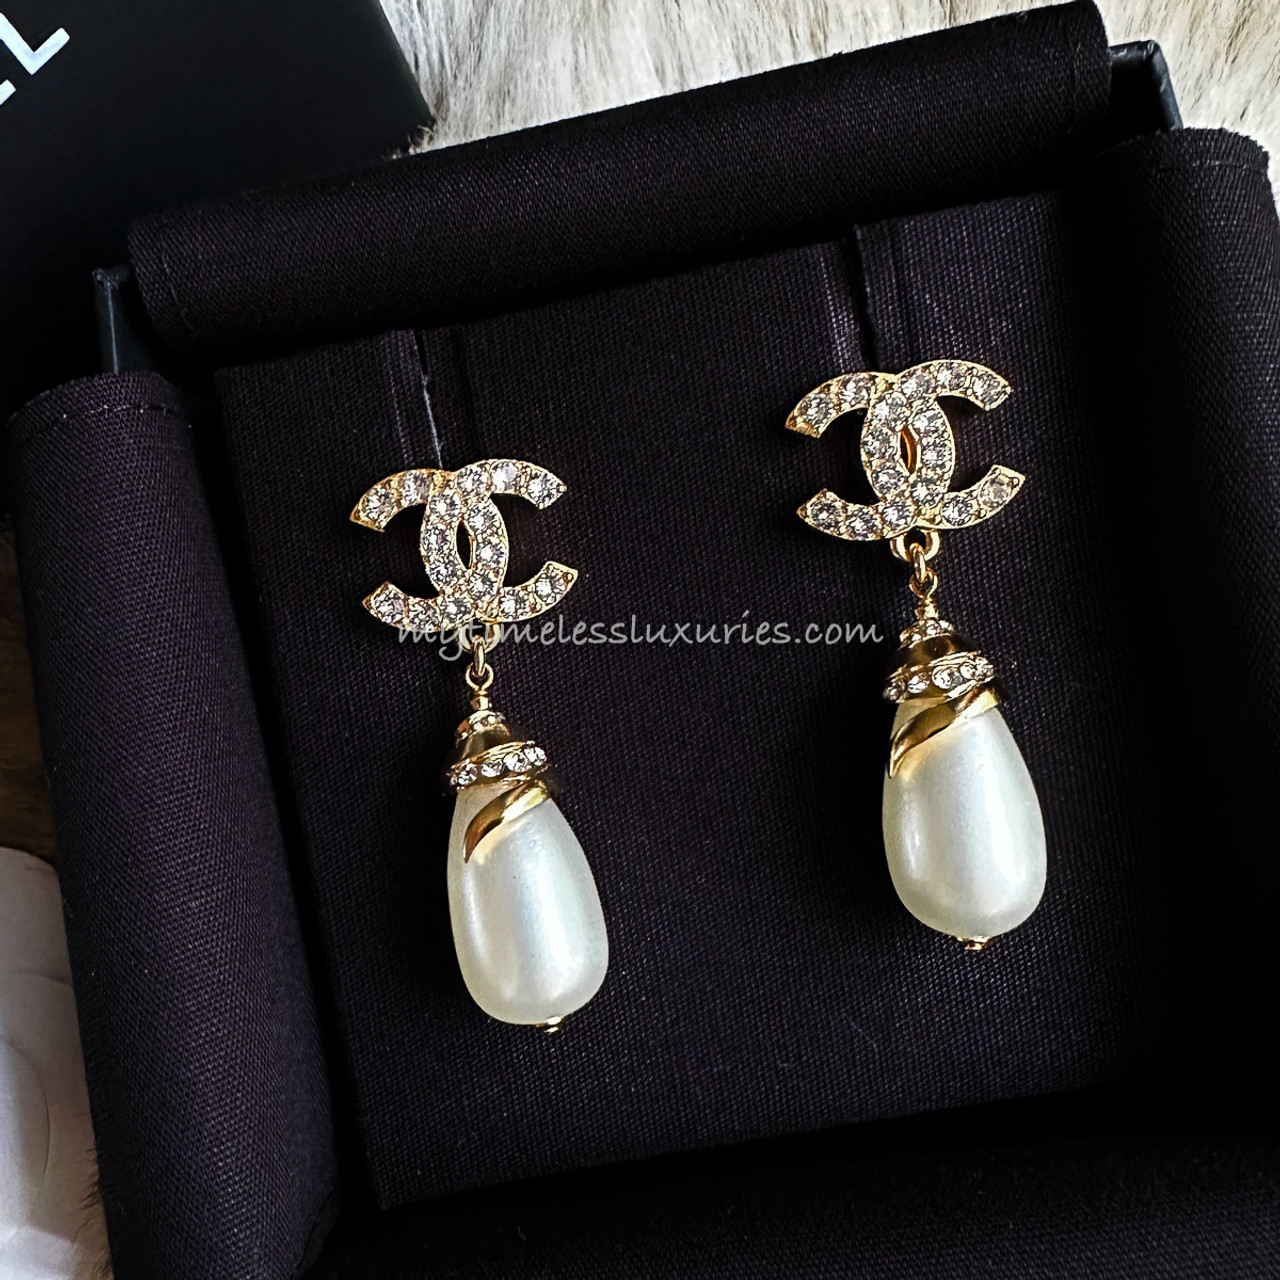 Chanel Pearl Drop Earrings  83 For Sale on 1stDibs  chanel pearl earrings  chanel earrings pearl chanel earrings with pearl drop